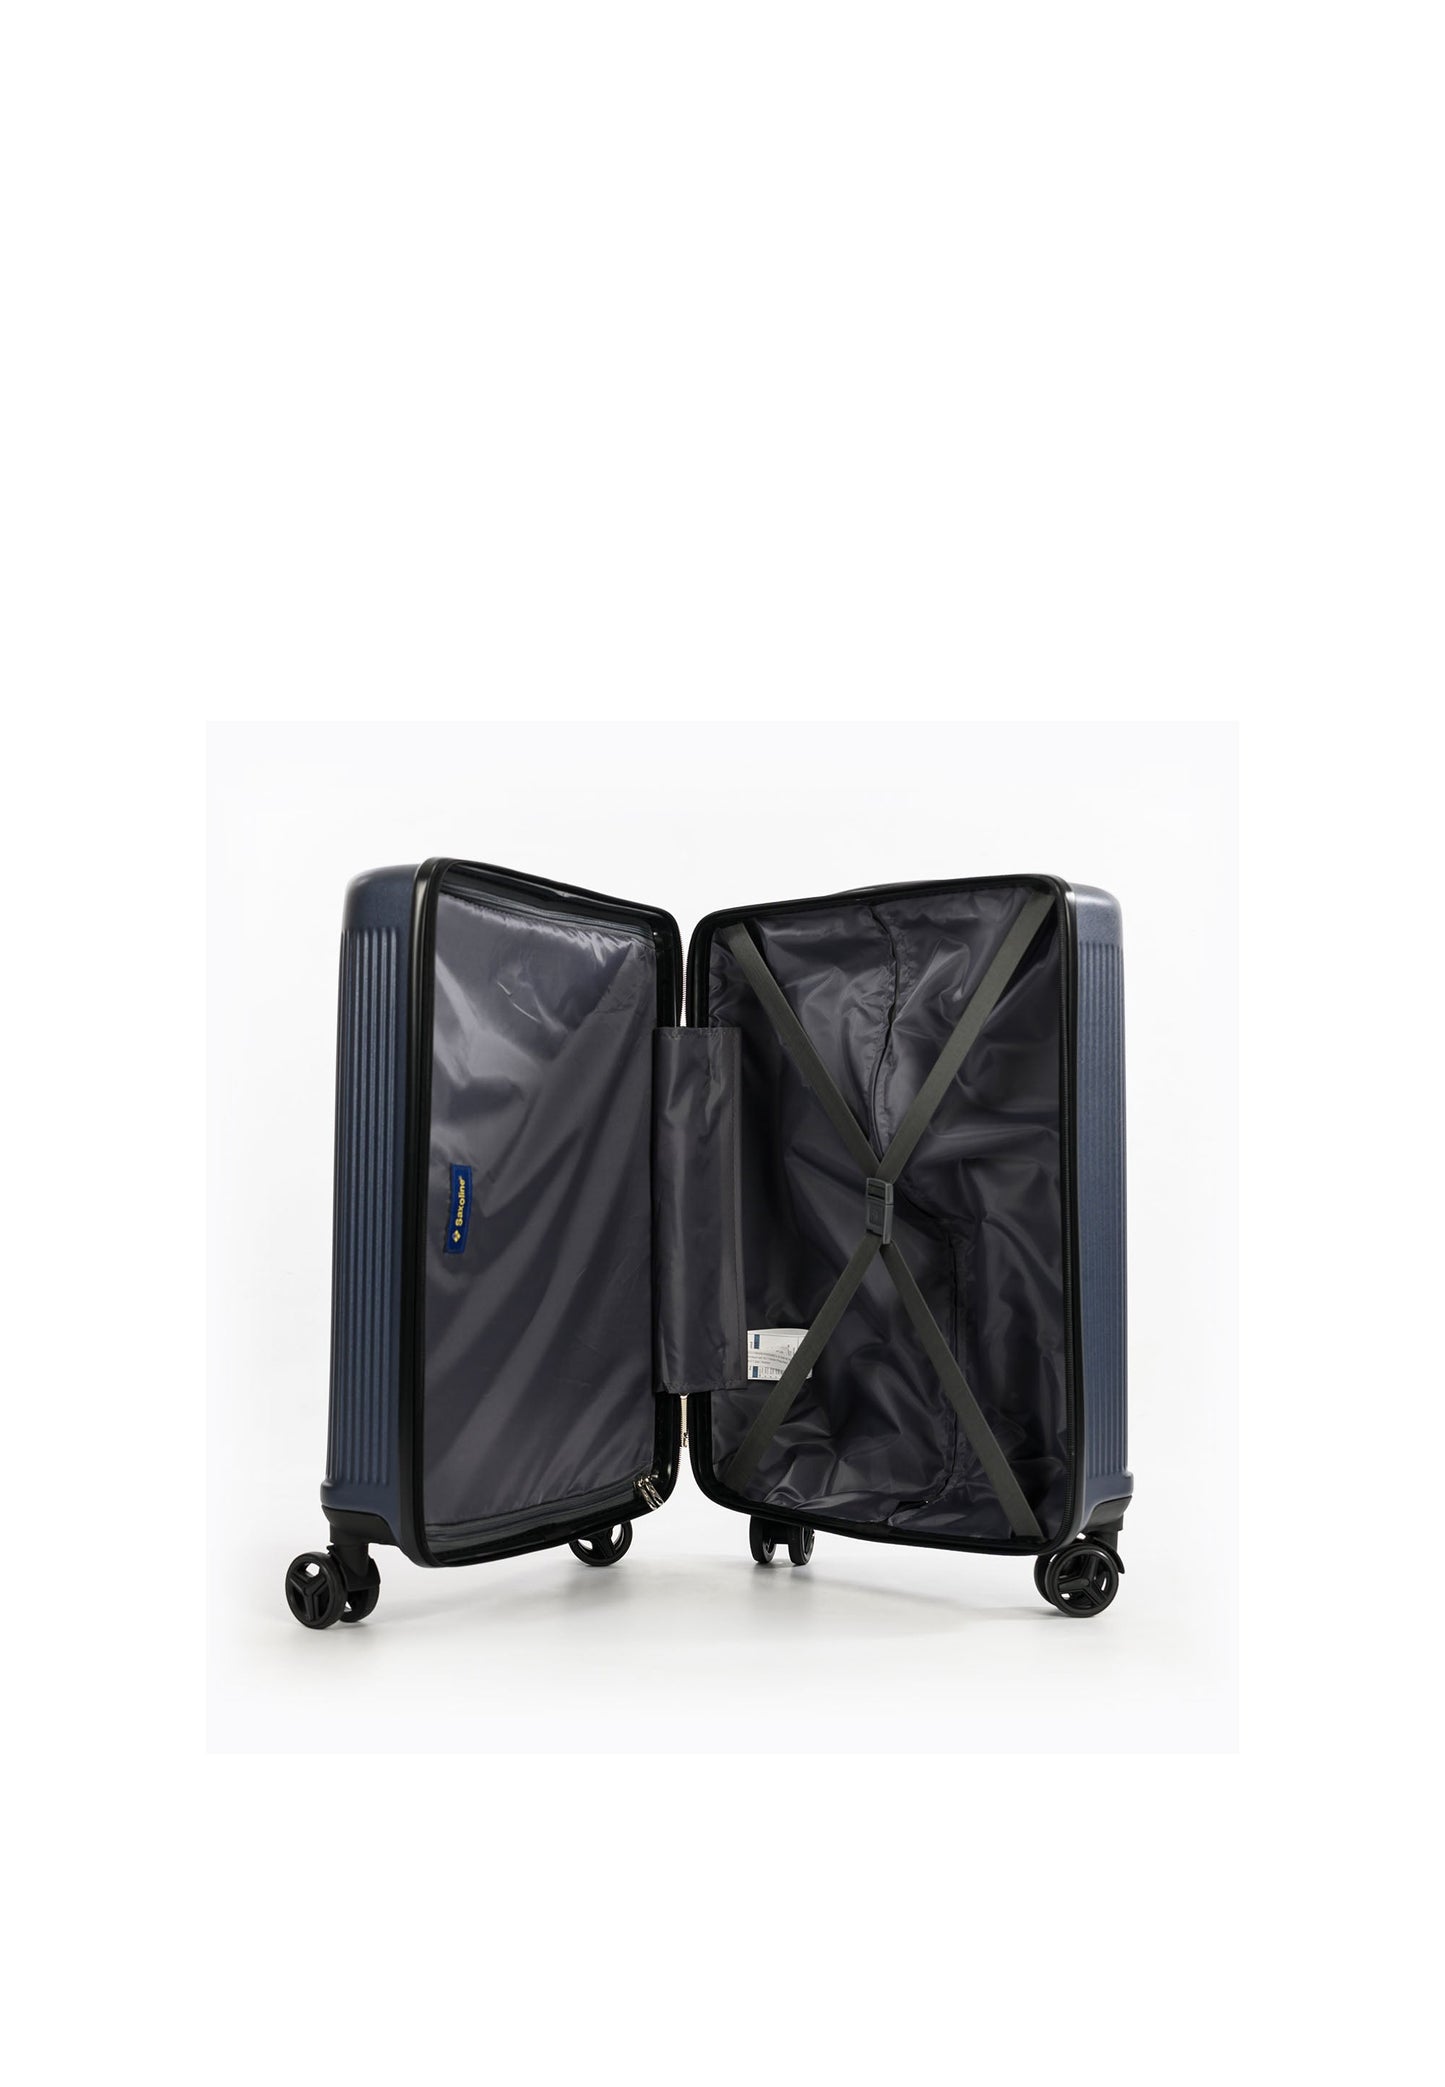 Saxoline Algarve Hard Luggage / Suitcase / Trolley - 65 cm (Medium) - - Blue